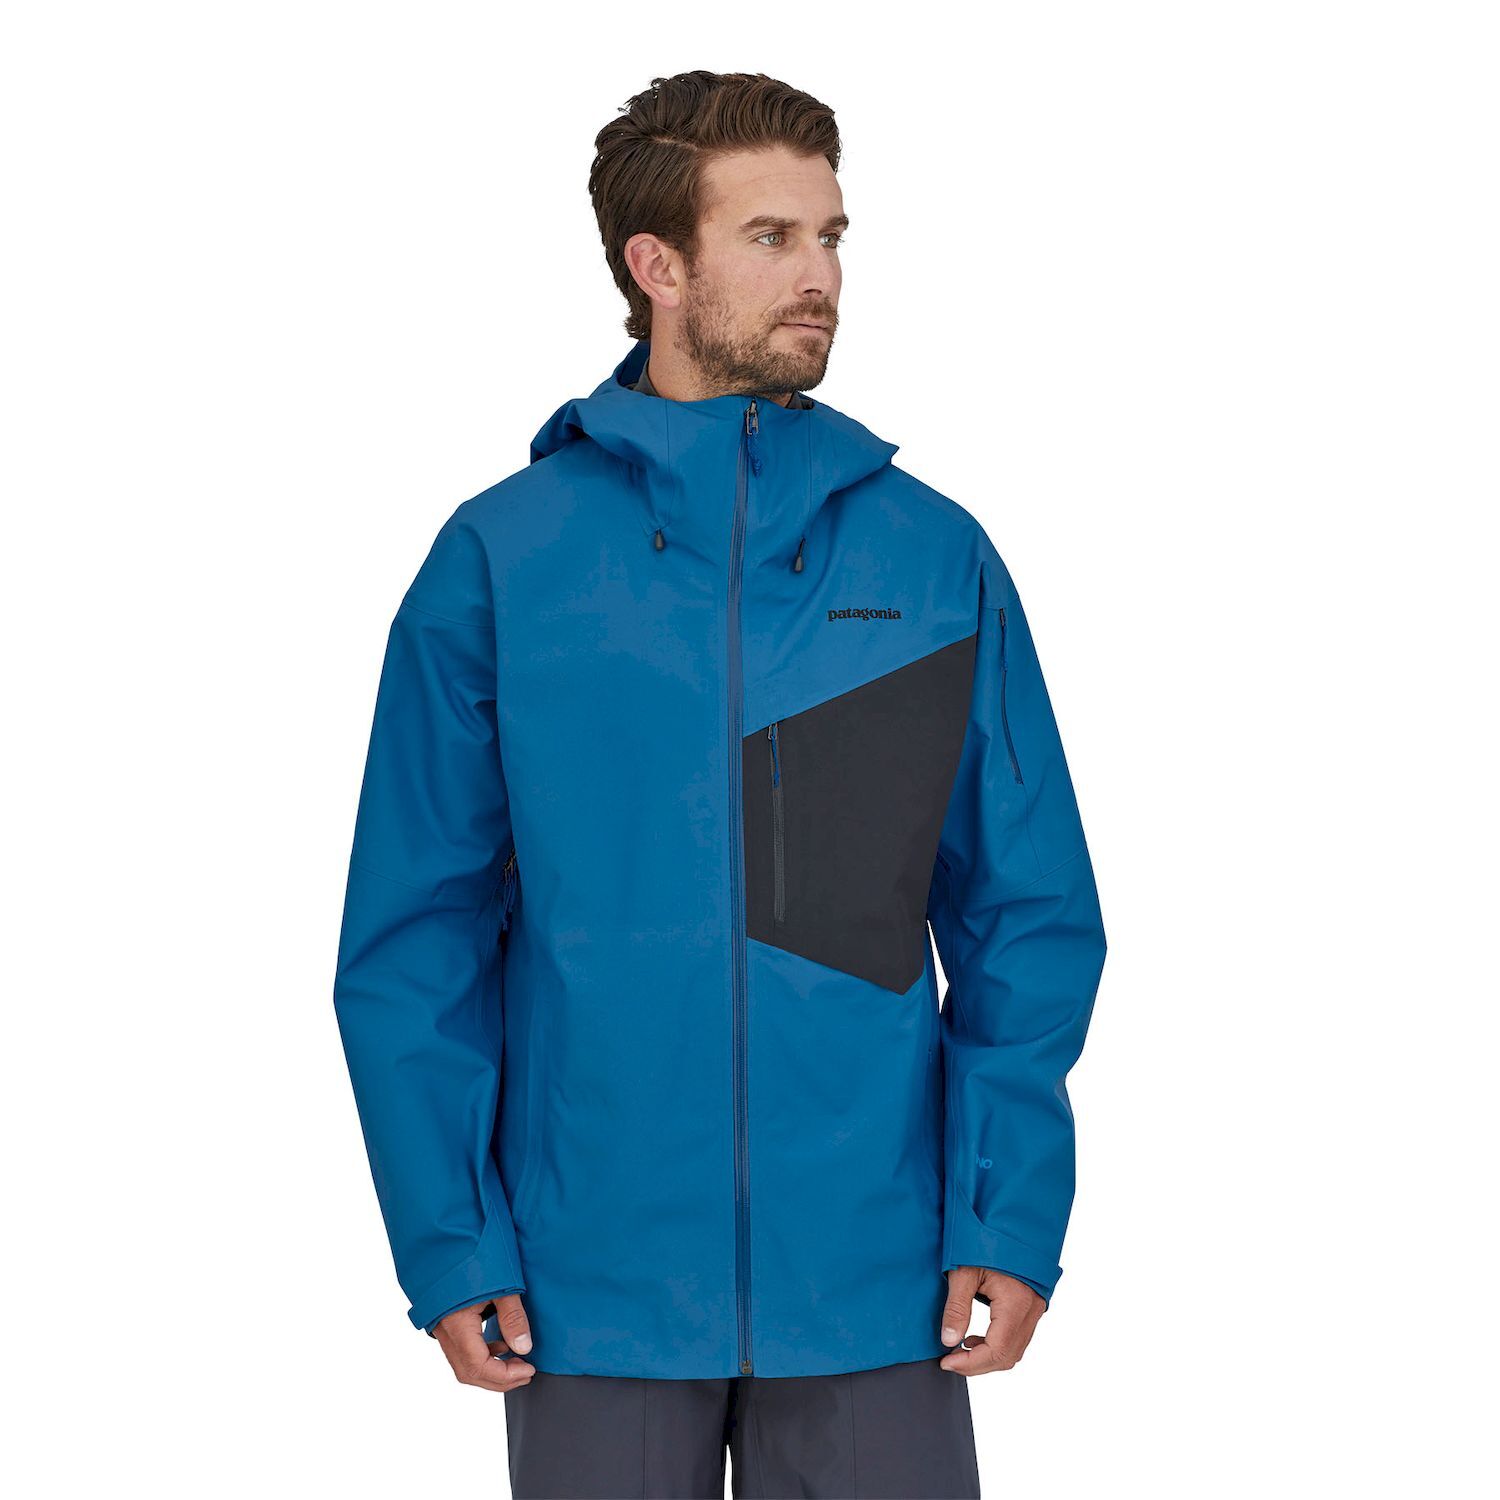 Patagonia Snowdrifter Jkt - Insulated jacket -Men's